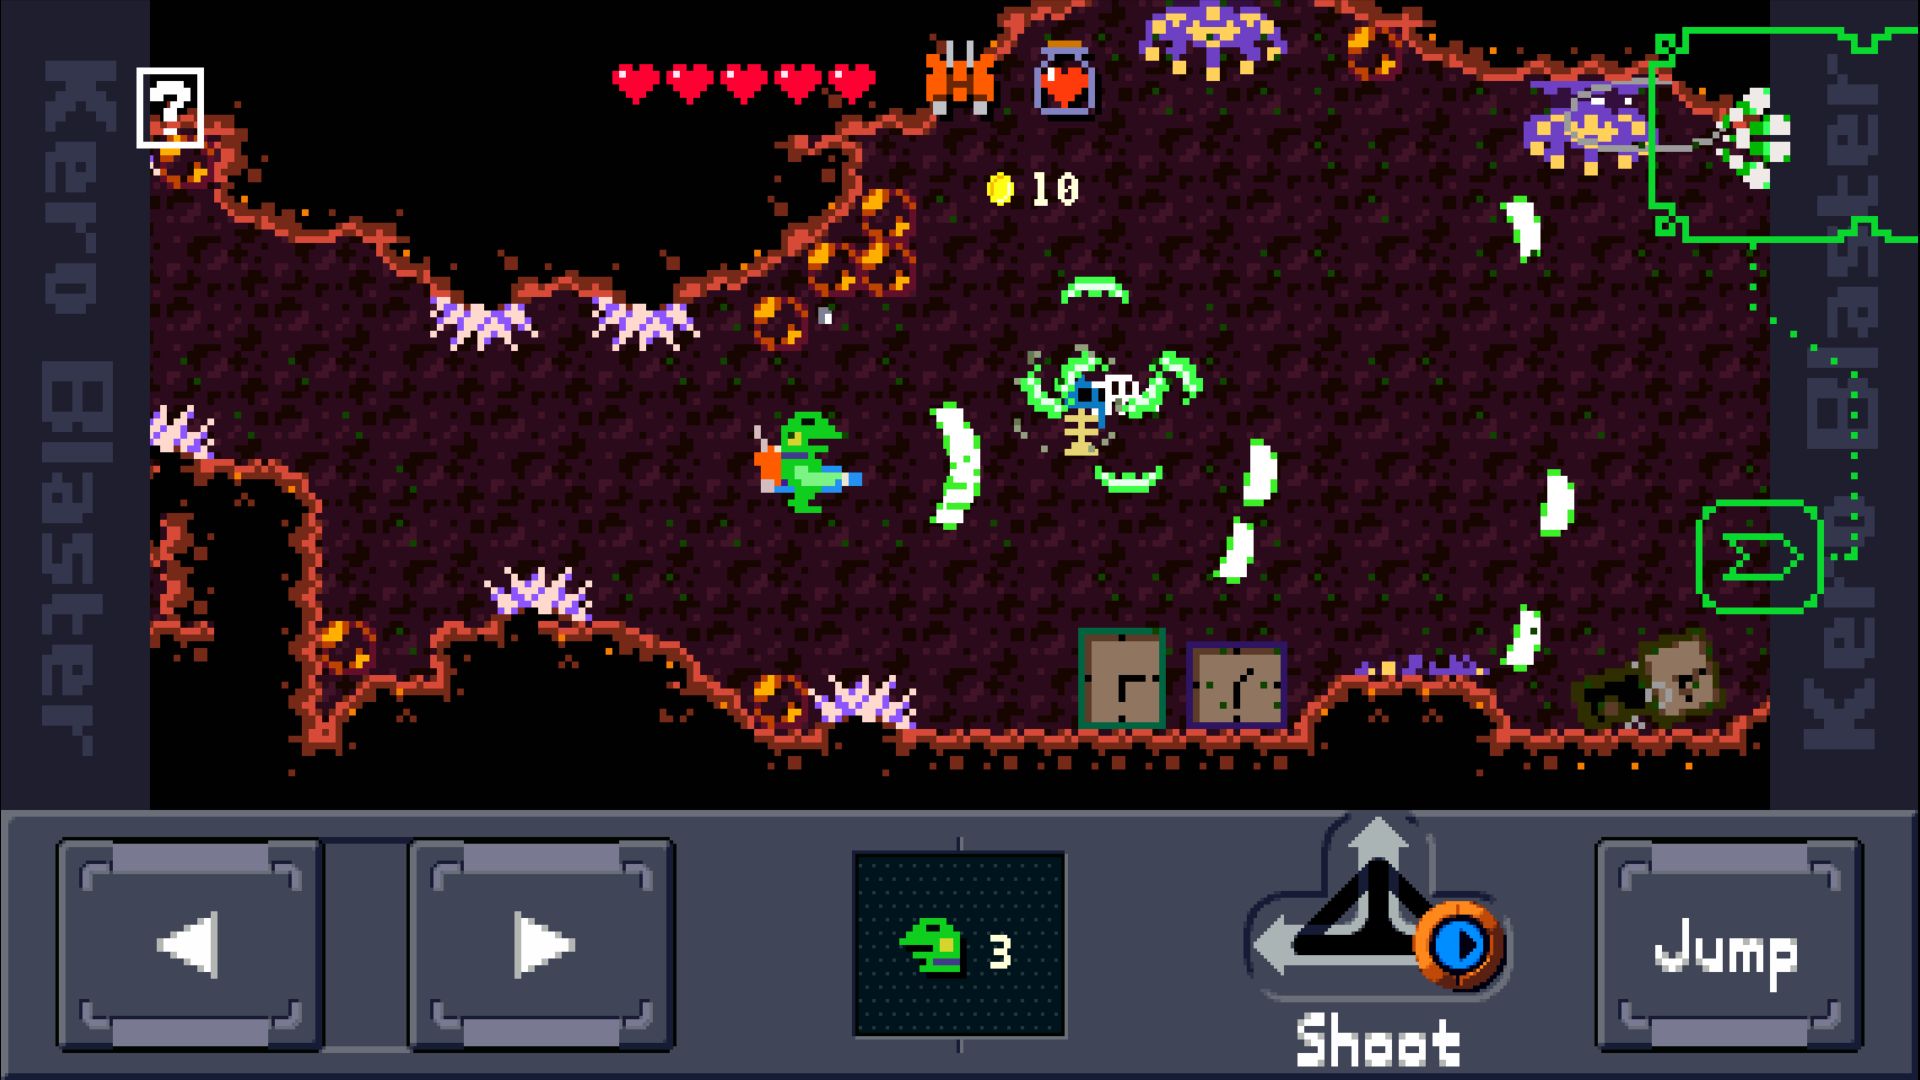 Kero Blaster - Android game screenshots.